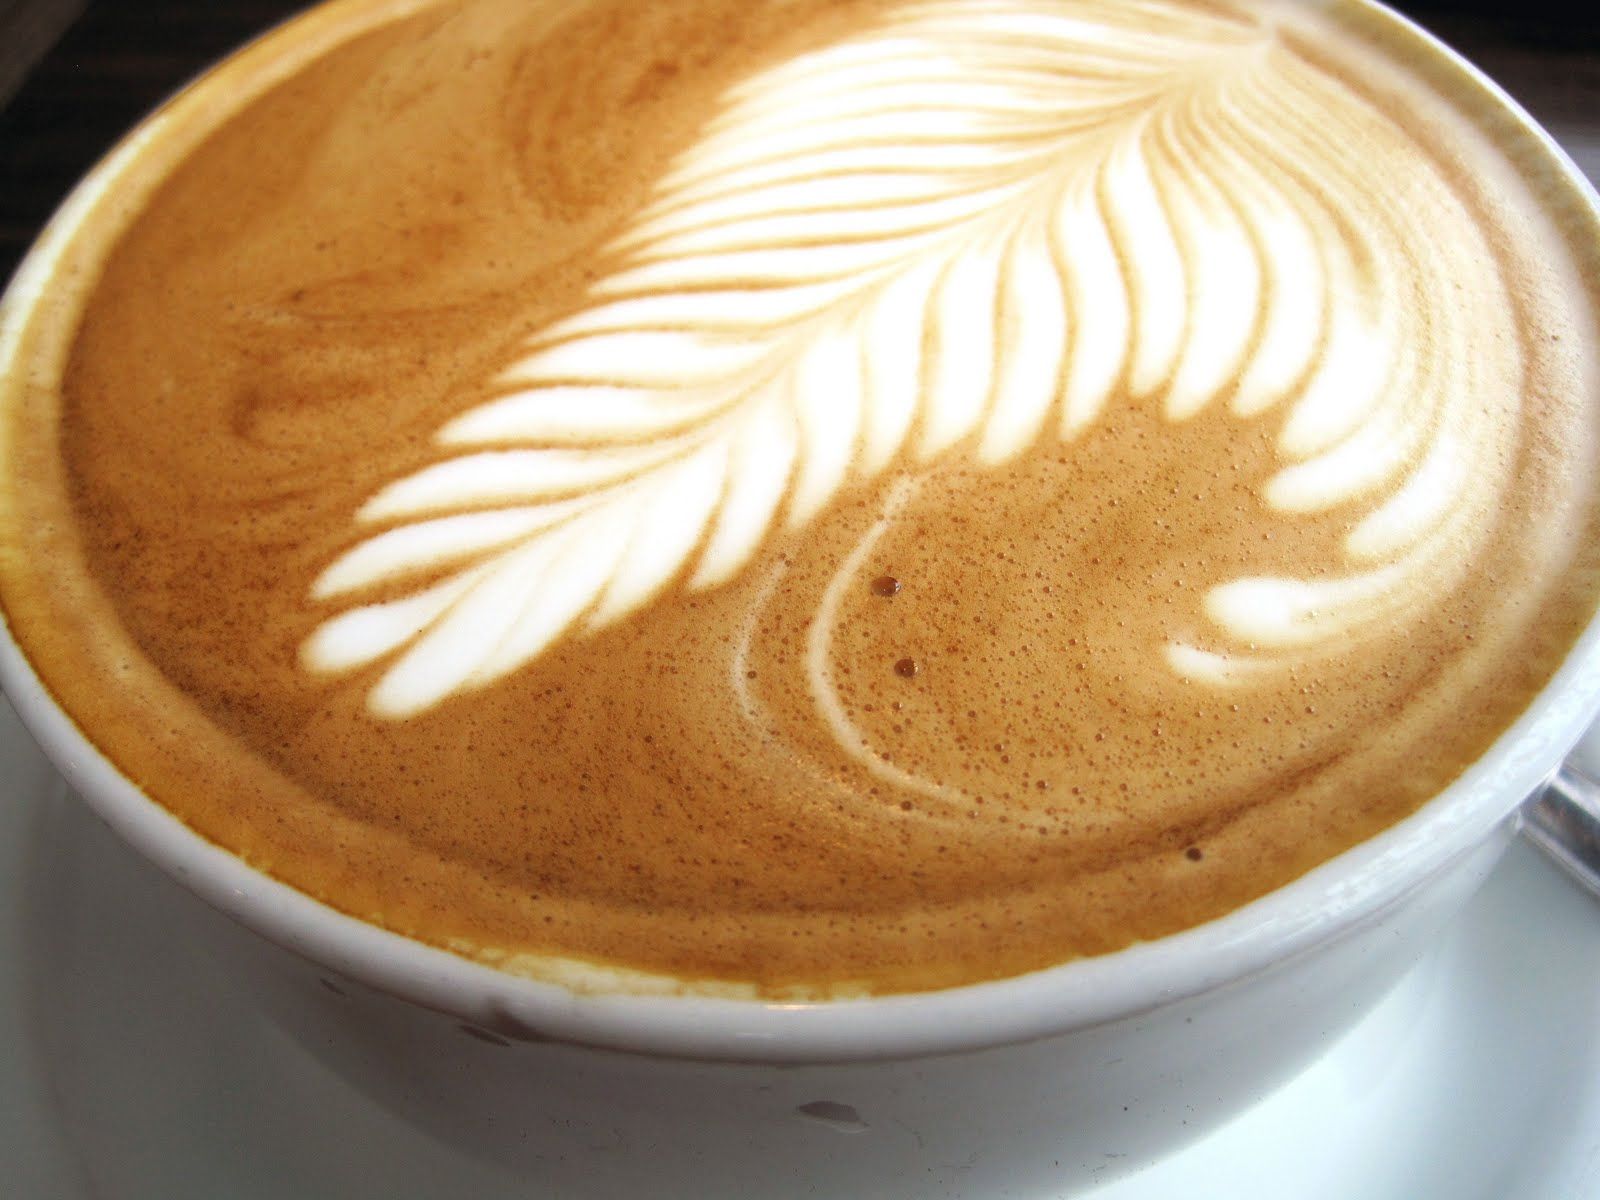 leafy fern | Art in a cup | Pinterest | Latte, Coffee art and Espresso